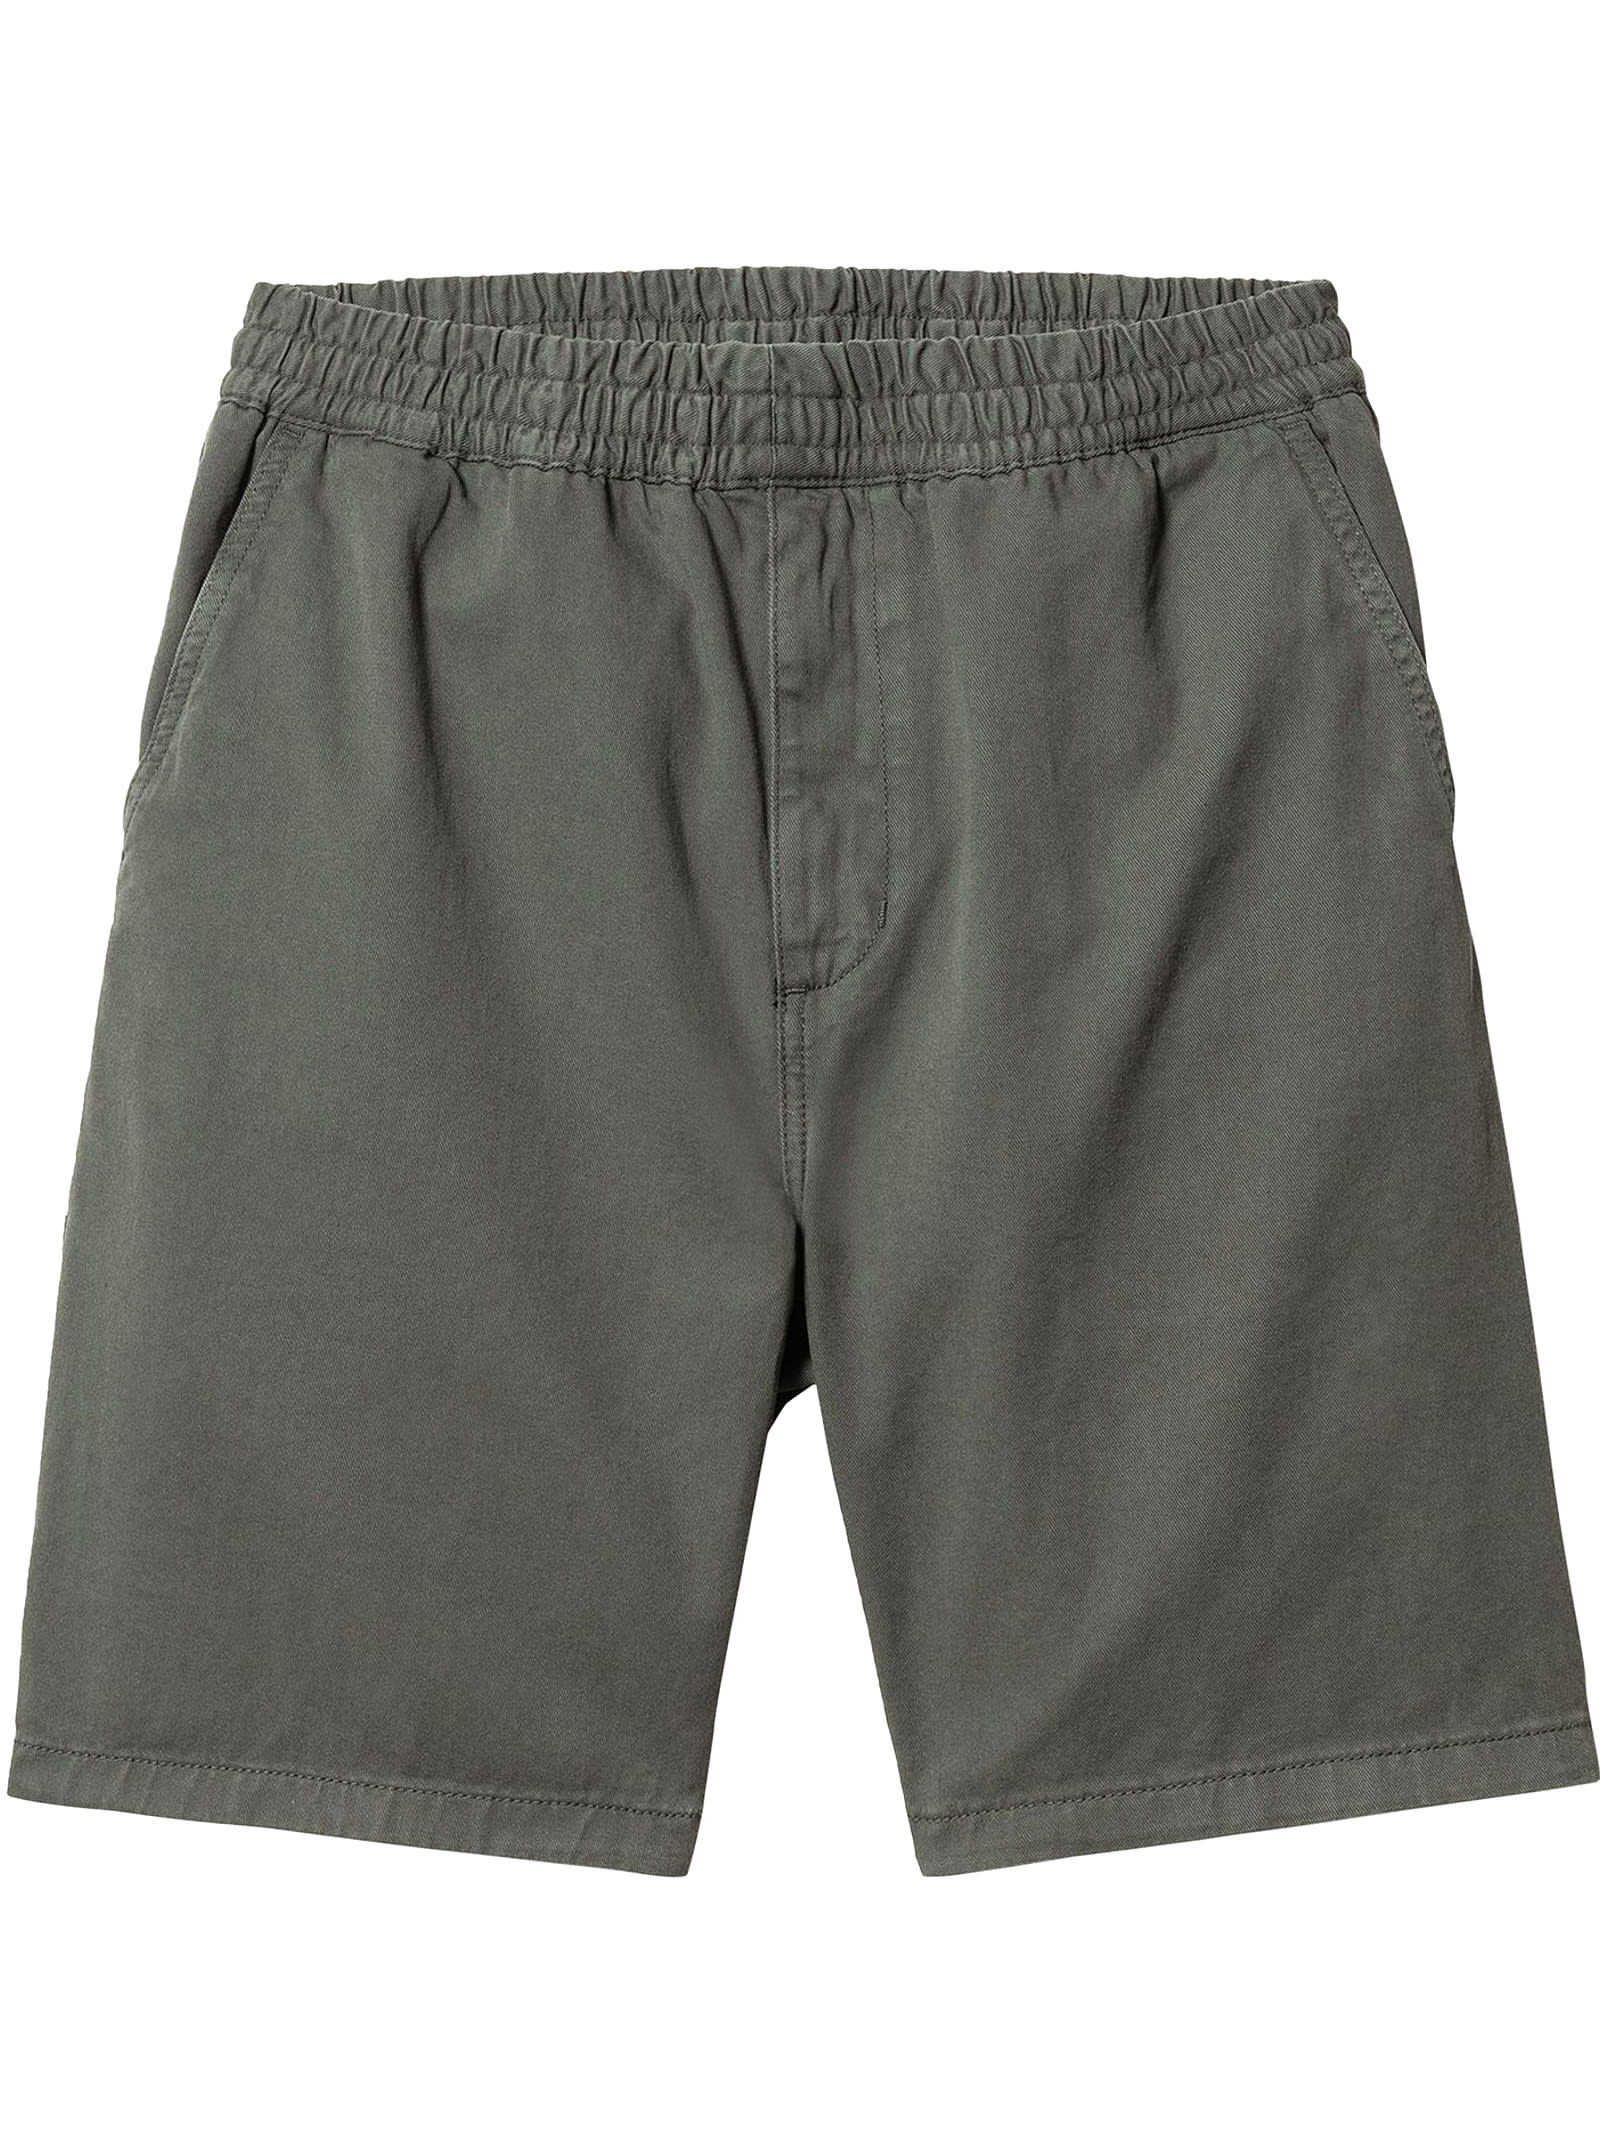 Carhartt Green Cotton Shorts